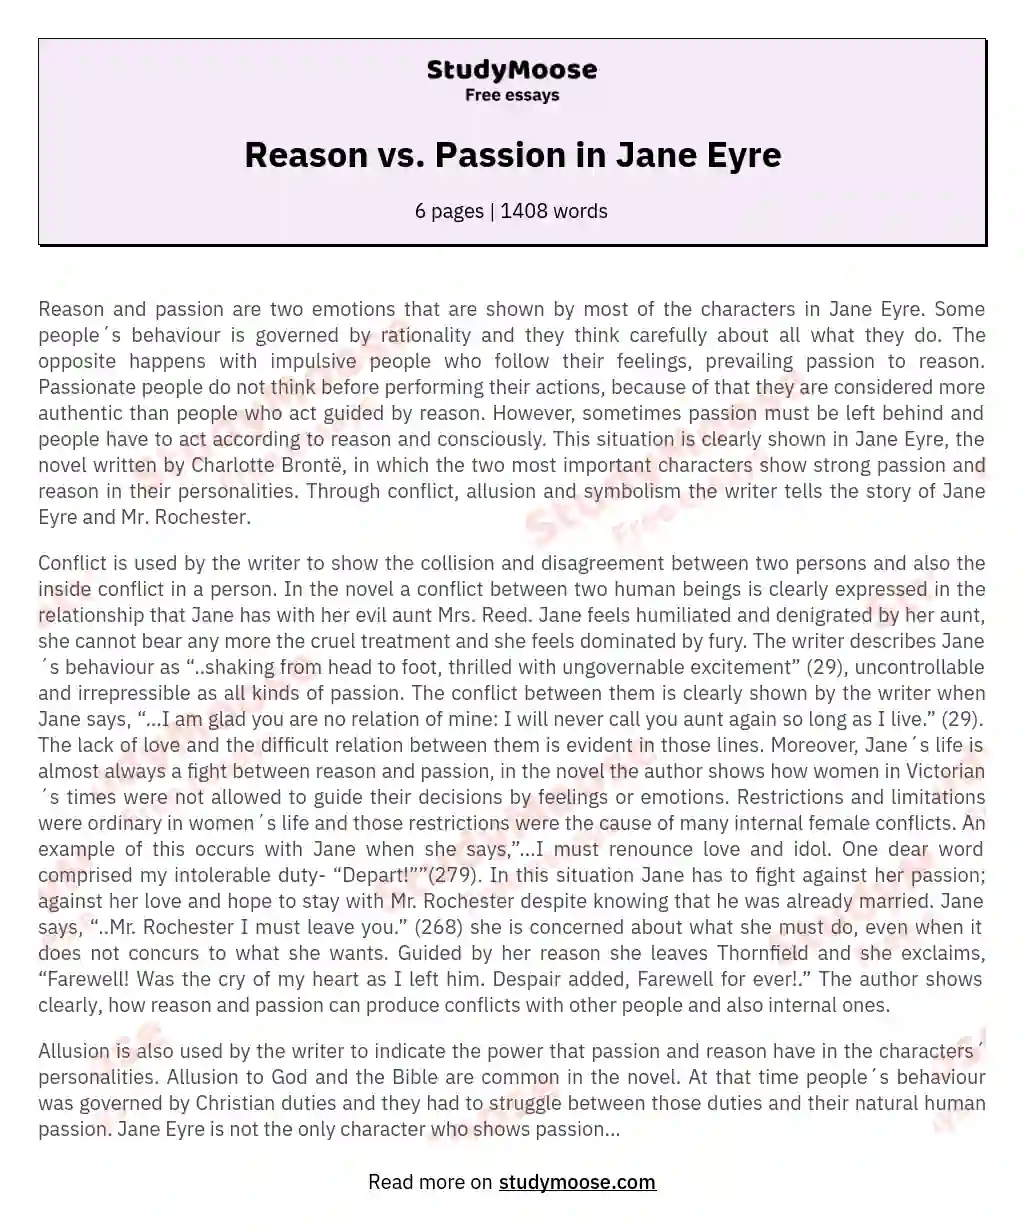 Reason vs. Passion in Jane Eyre essay